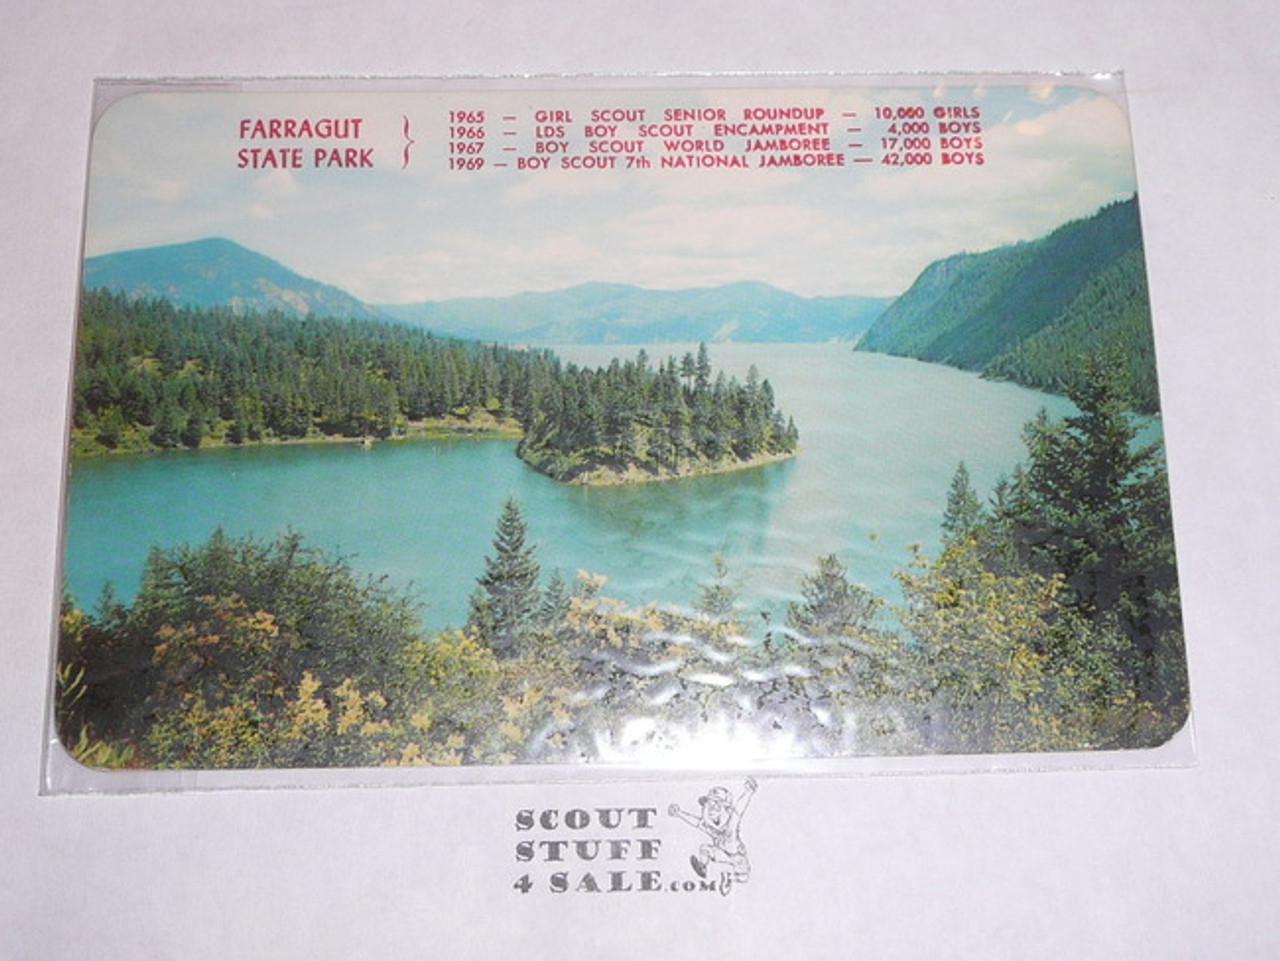 1969 National Jamboree Post Card, Ariel View of Farragut State Park